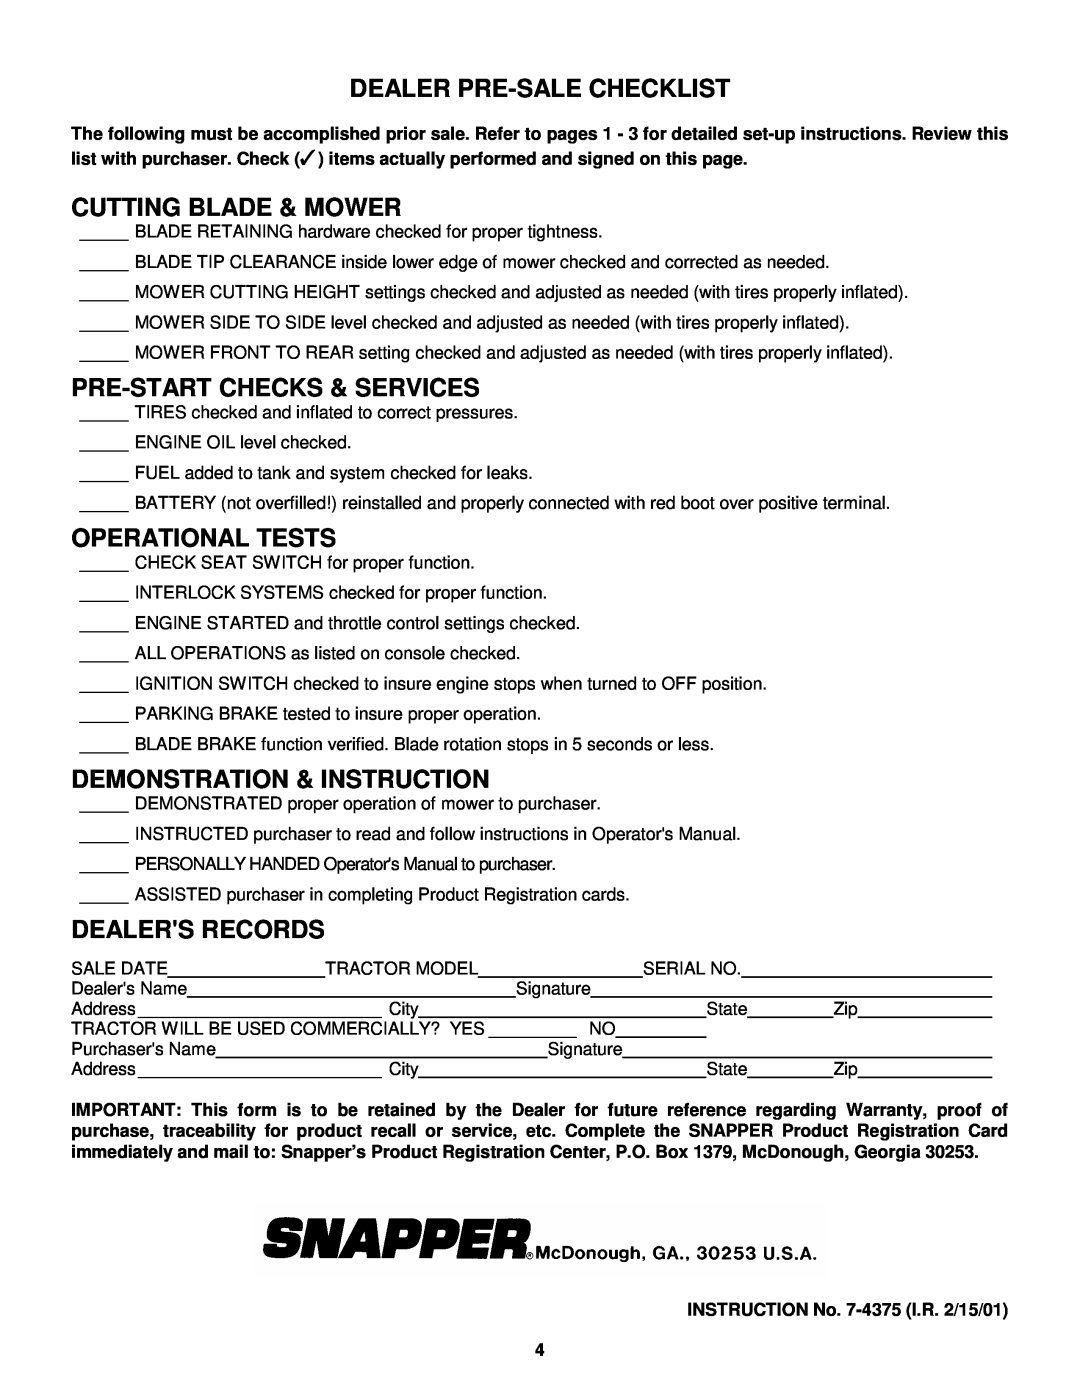 Snapper 7-4375 manual Dealer Pre-Salechecklist, Cutting Blade & Mower, Pre-Startchecks & Services, Operational Tests 